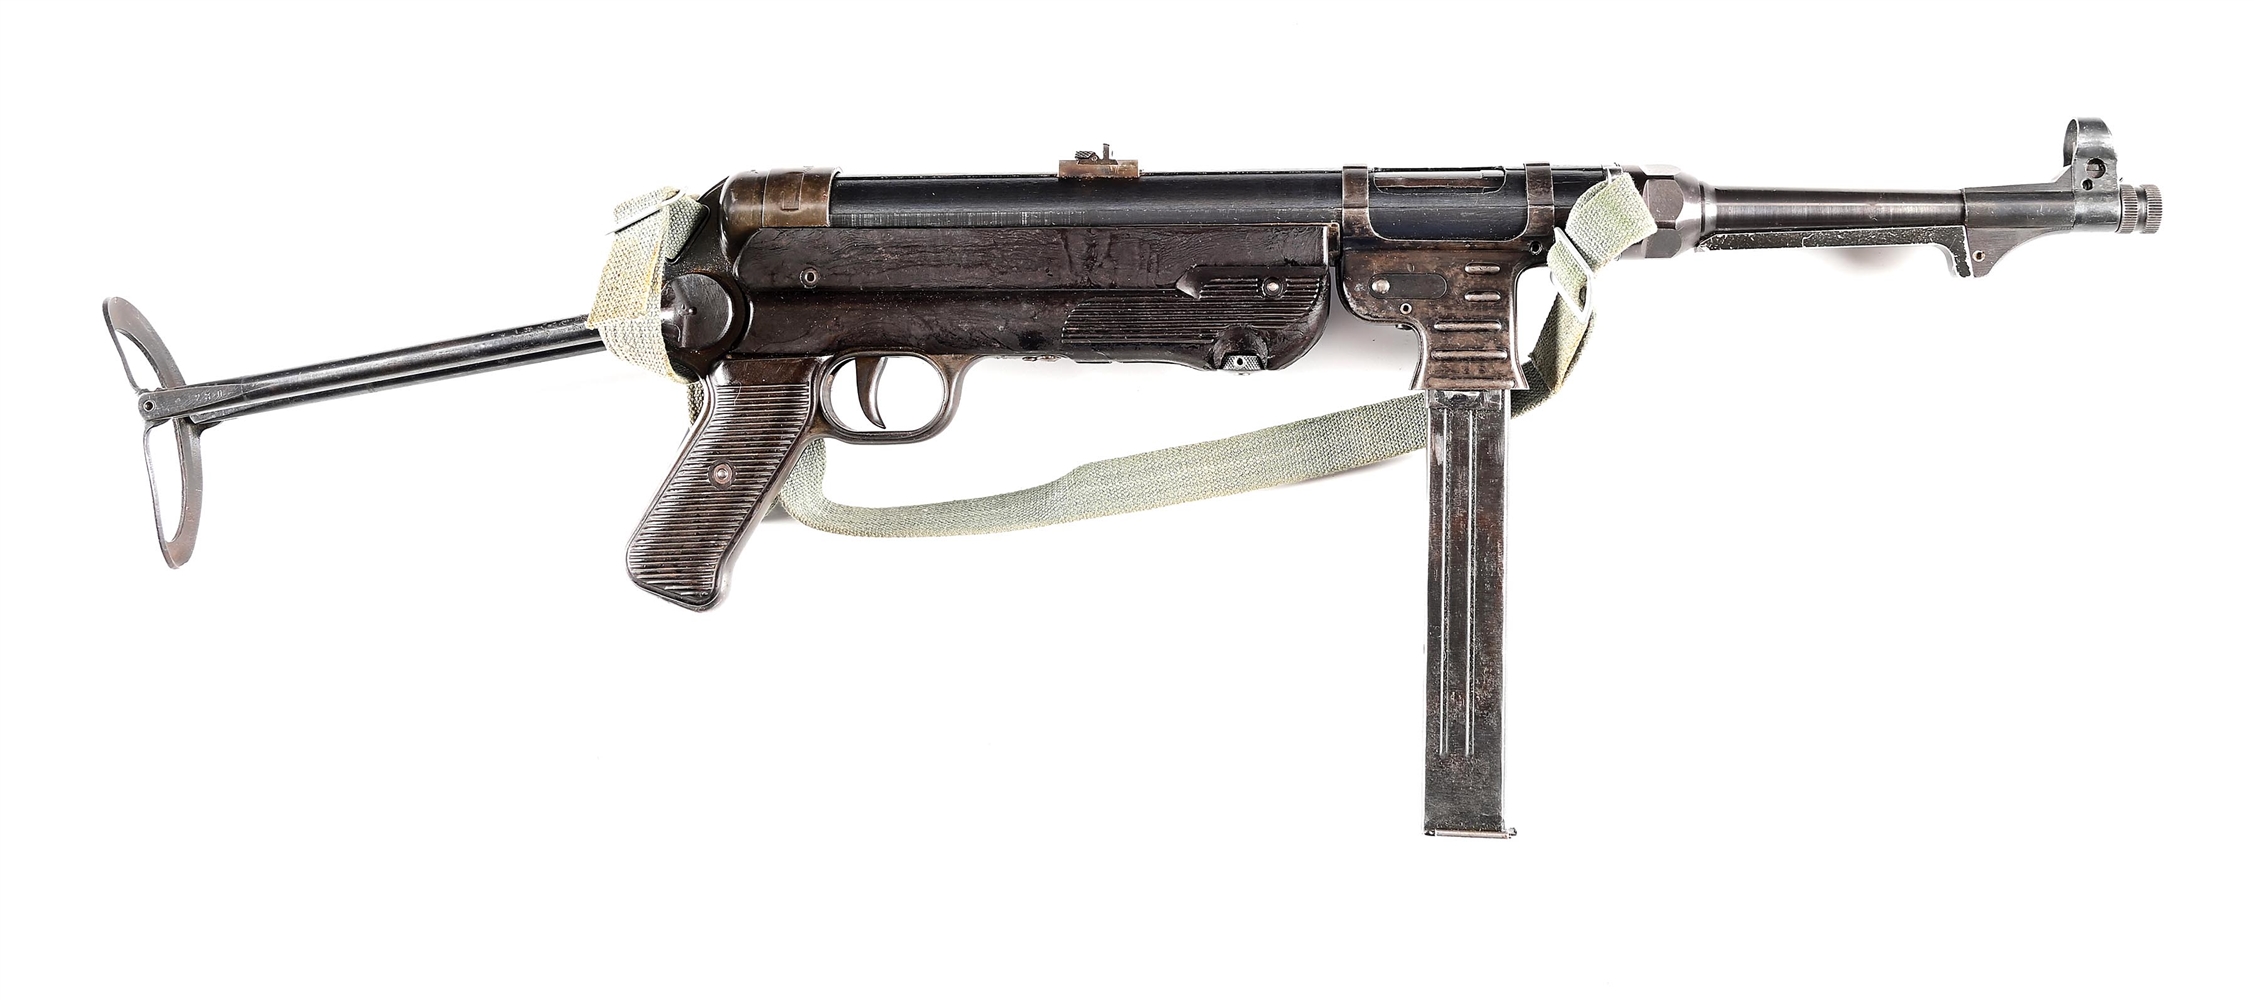 (N) CHARLES ERB REGISTERED MP40 MACHINE GUN (FULLY TRANSFERABLE).